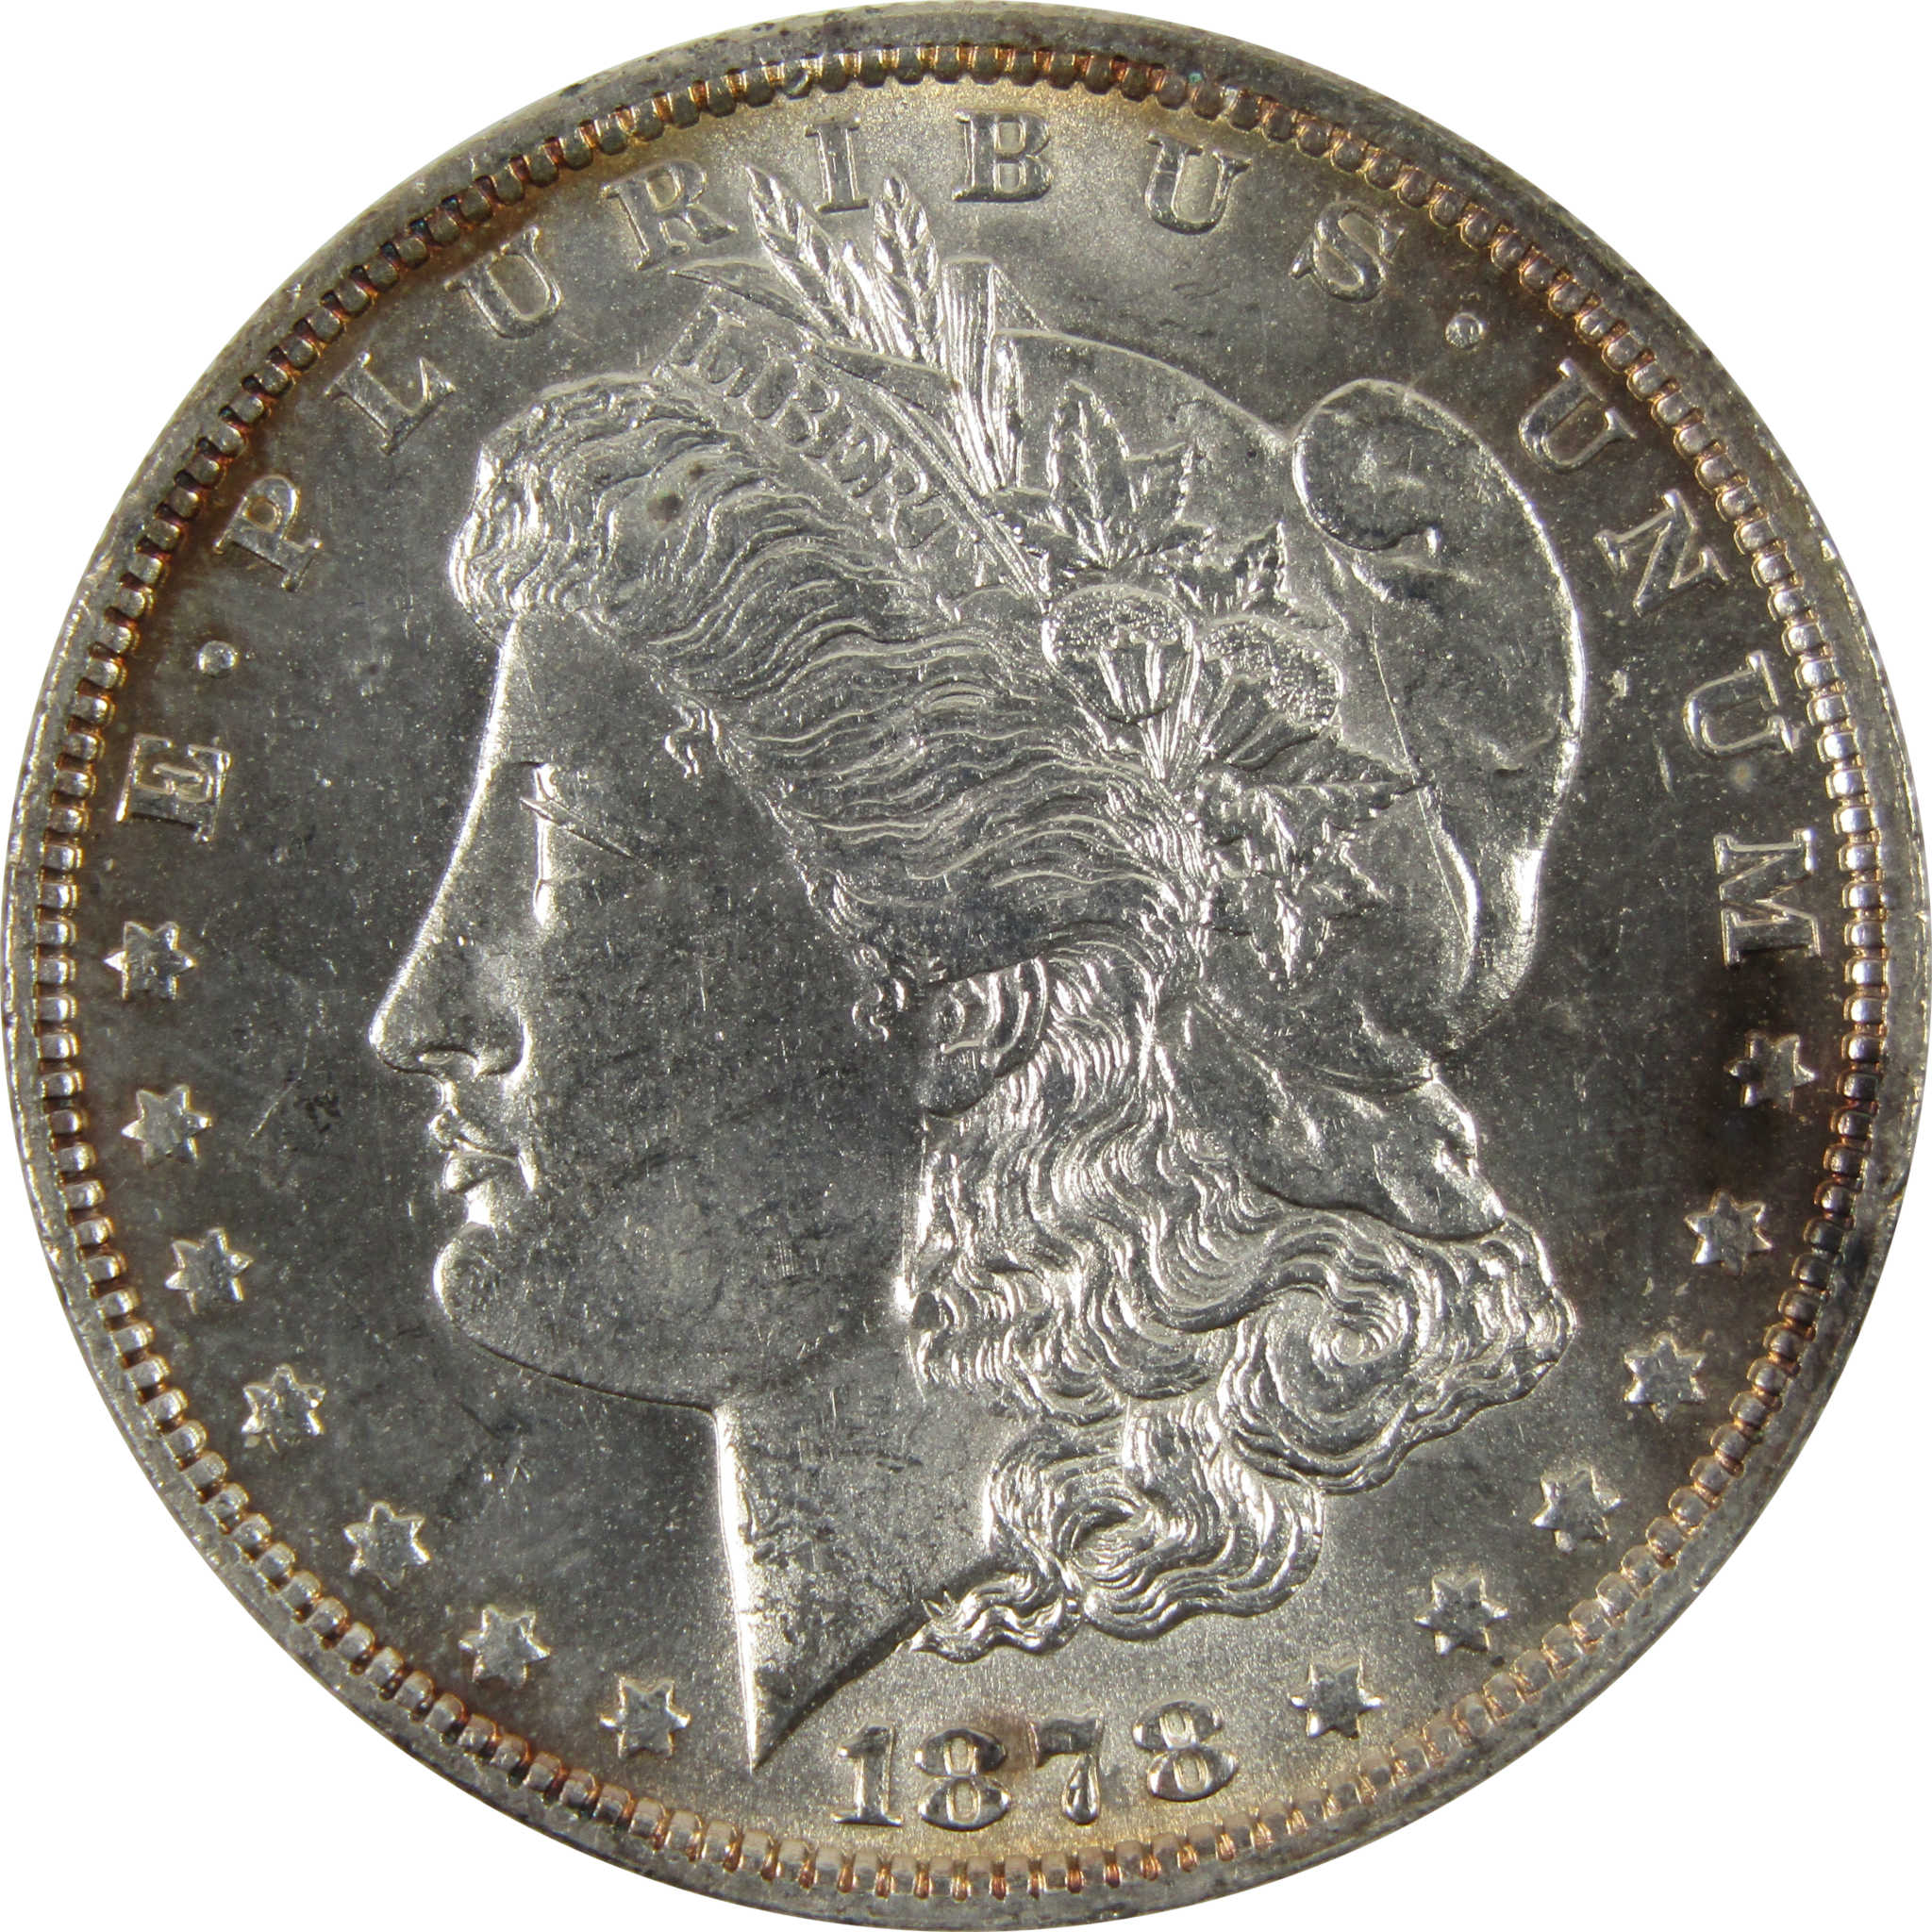 1878 7TF Rev 79 Morgan Dollar BU Uncirculated 90% Silver SKU:I8633 - Morgan coin - Morgan silver dollar - Morgan silver dollar for sale - Profile Coins &amp; Collectibles